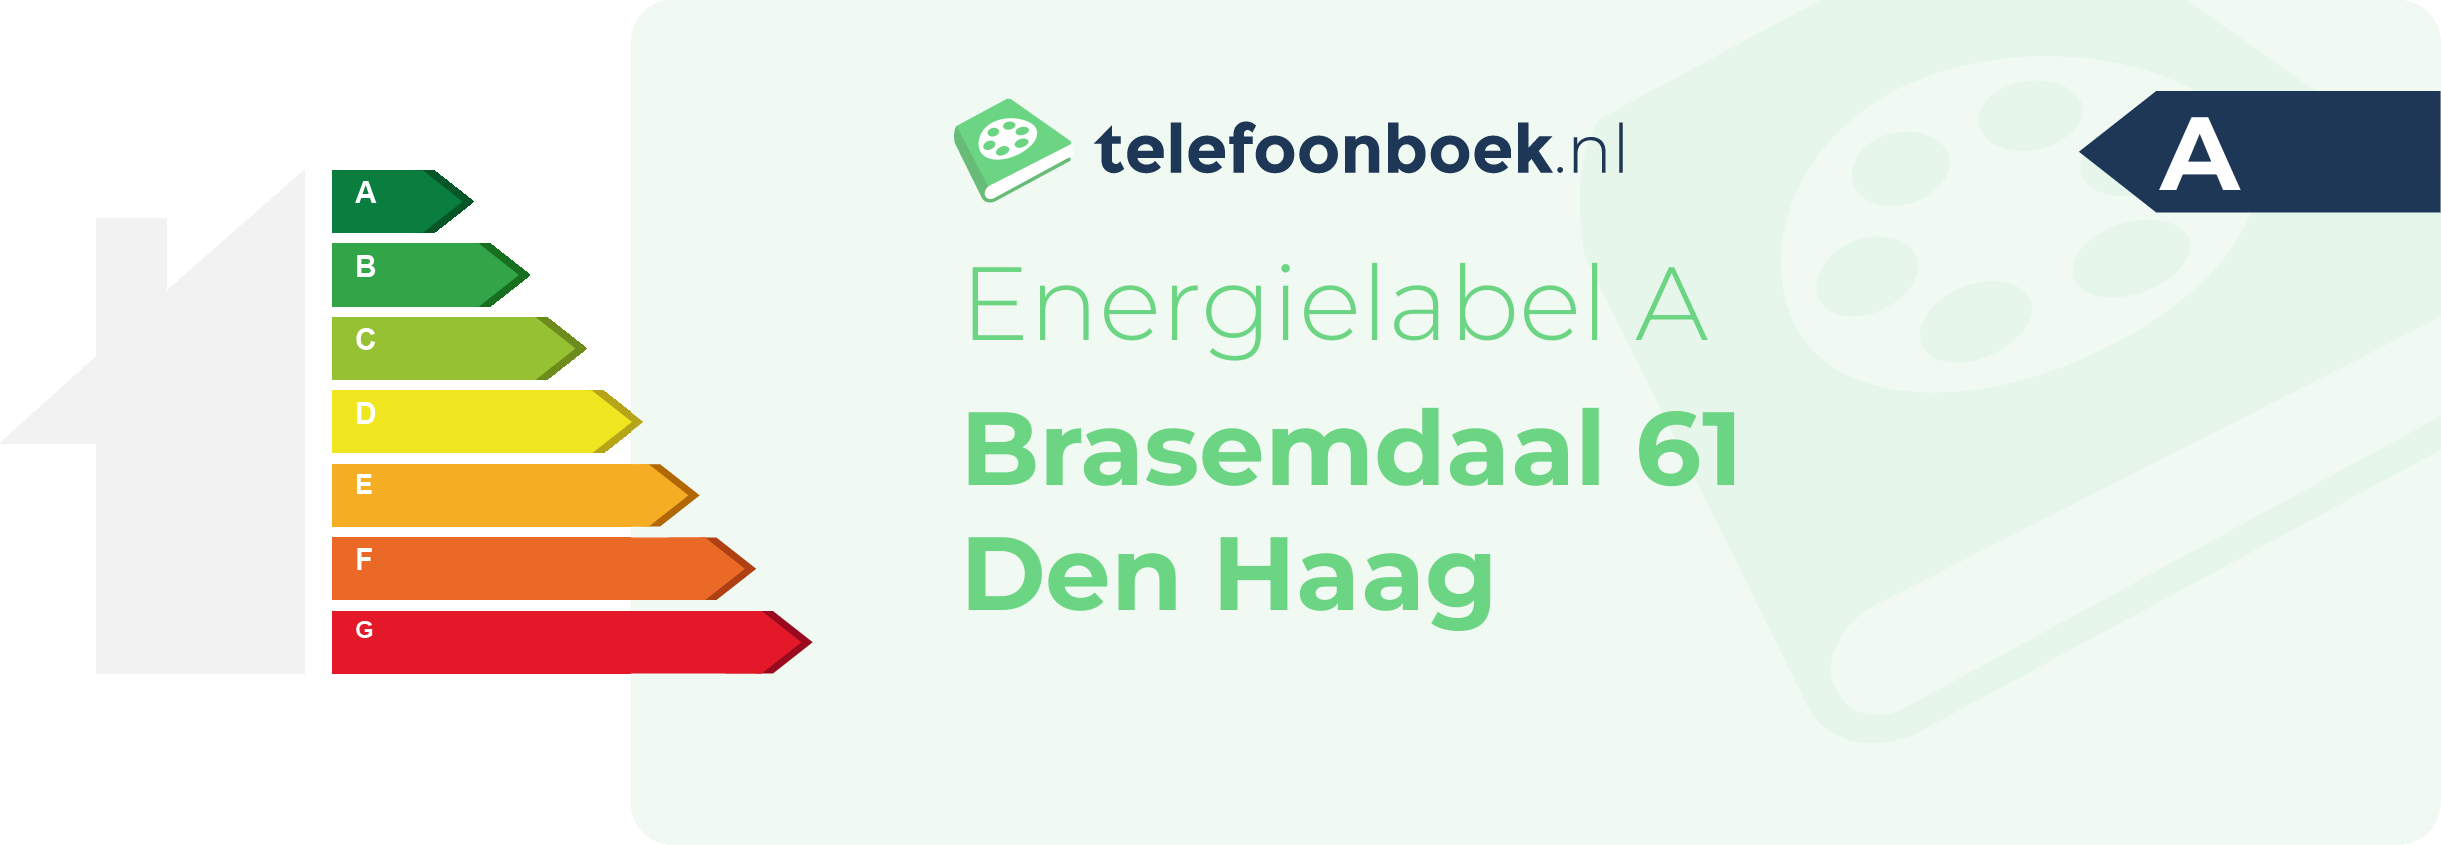 Energielabel Brasemdaal 61 Den Haag